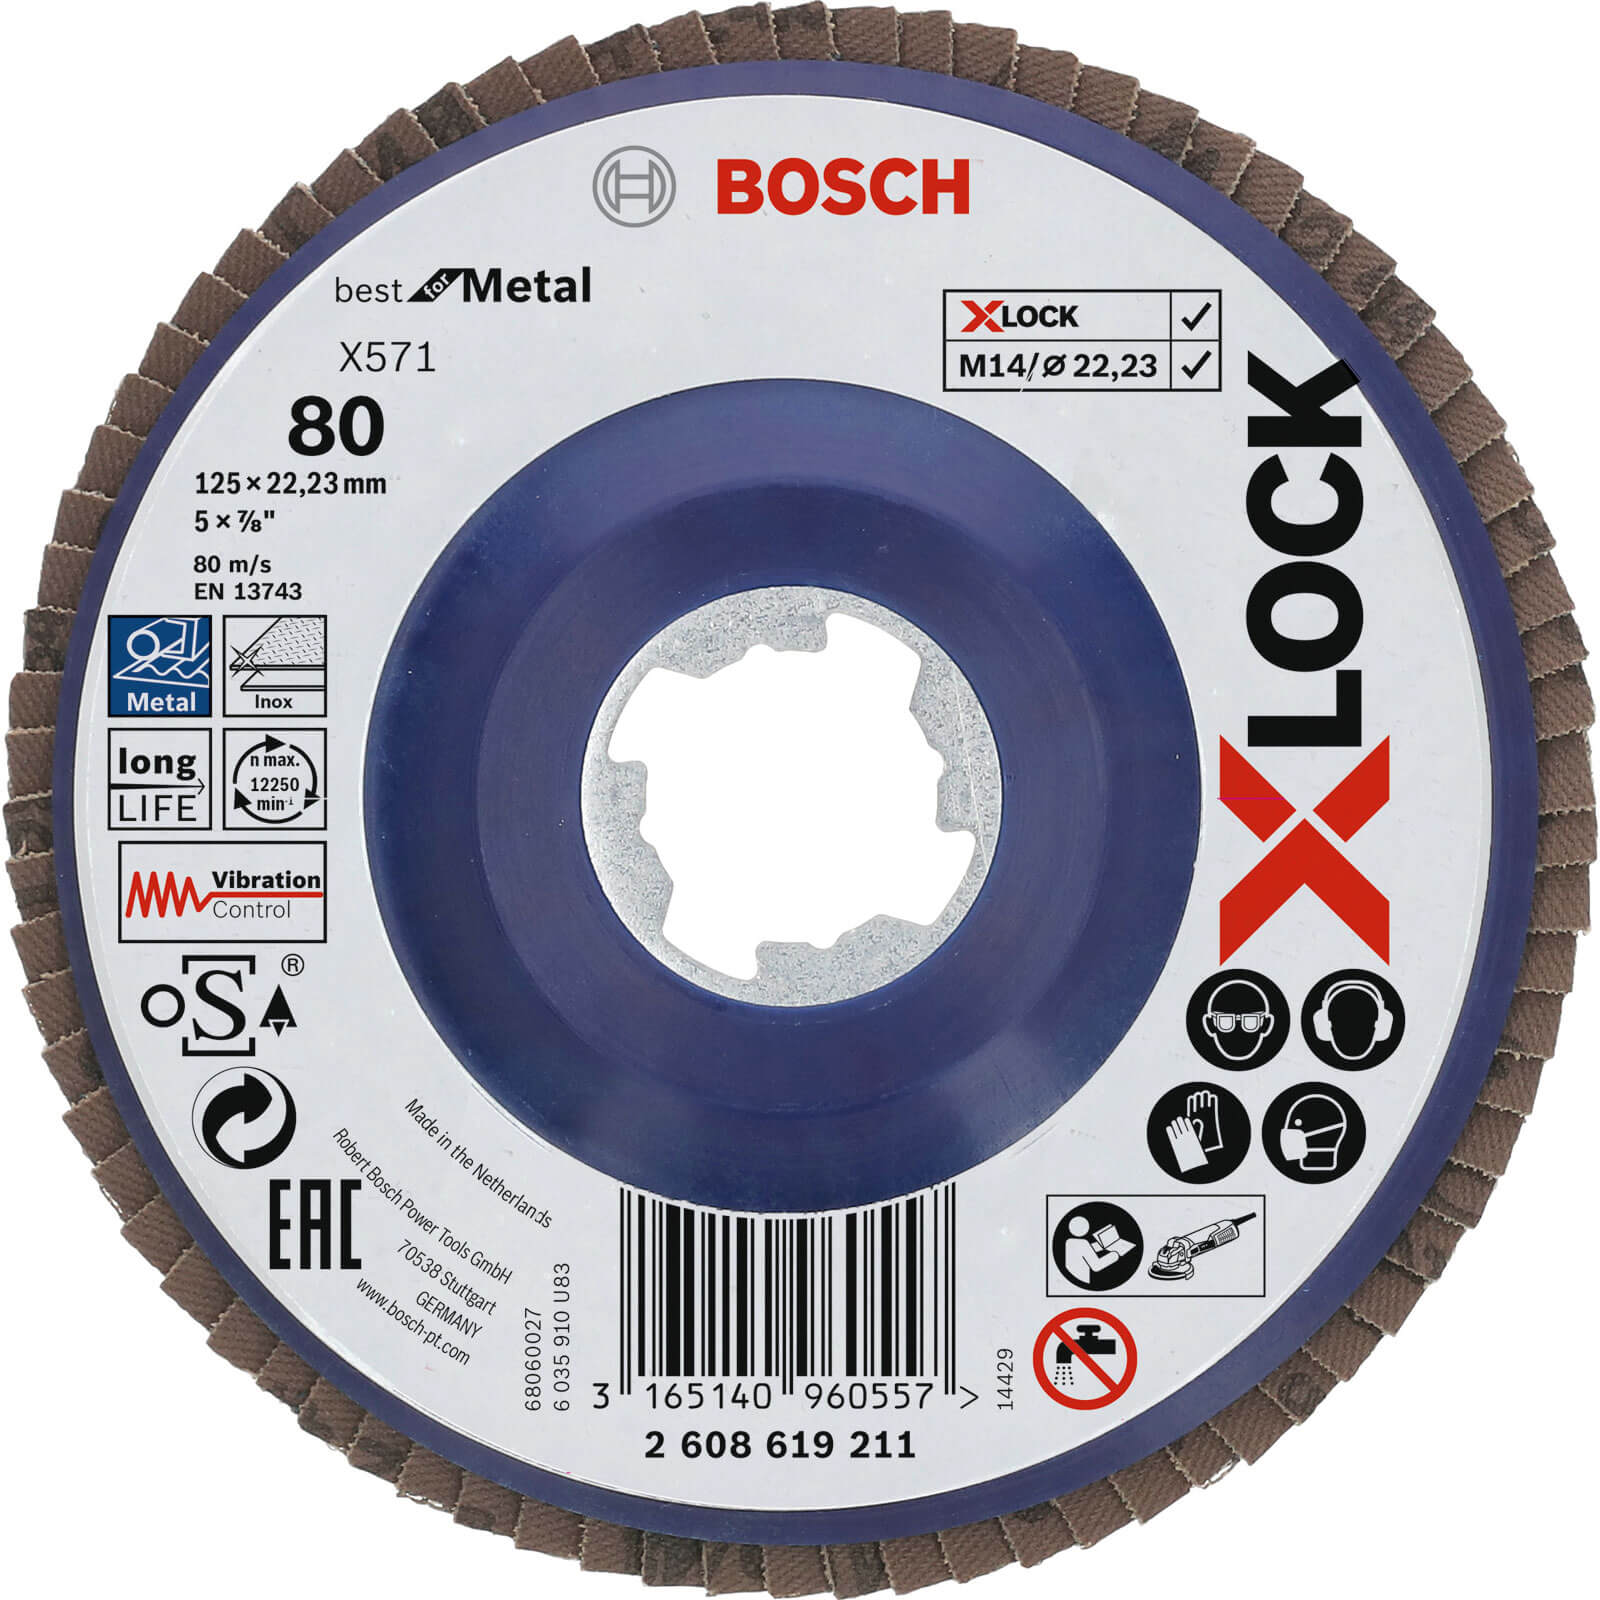 Photos - Cutting Disc Bosch X Lock Zirconium Abrasive Straight Flap Disc 125mm 80g Pack of 1 260 